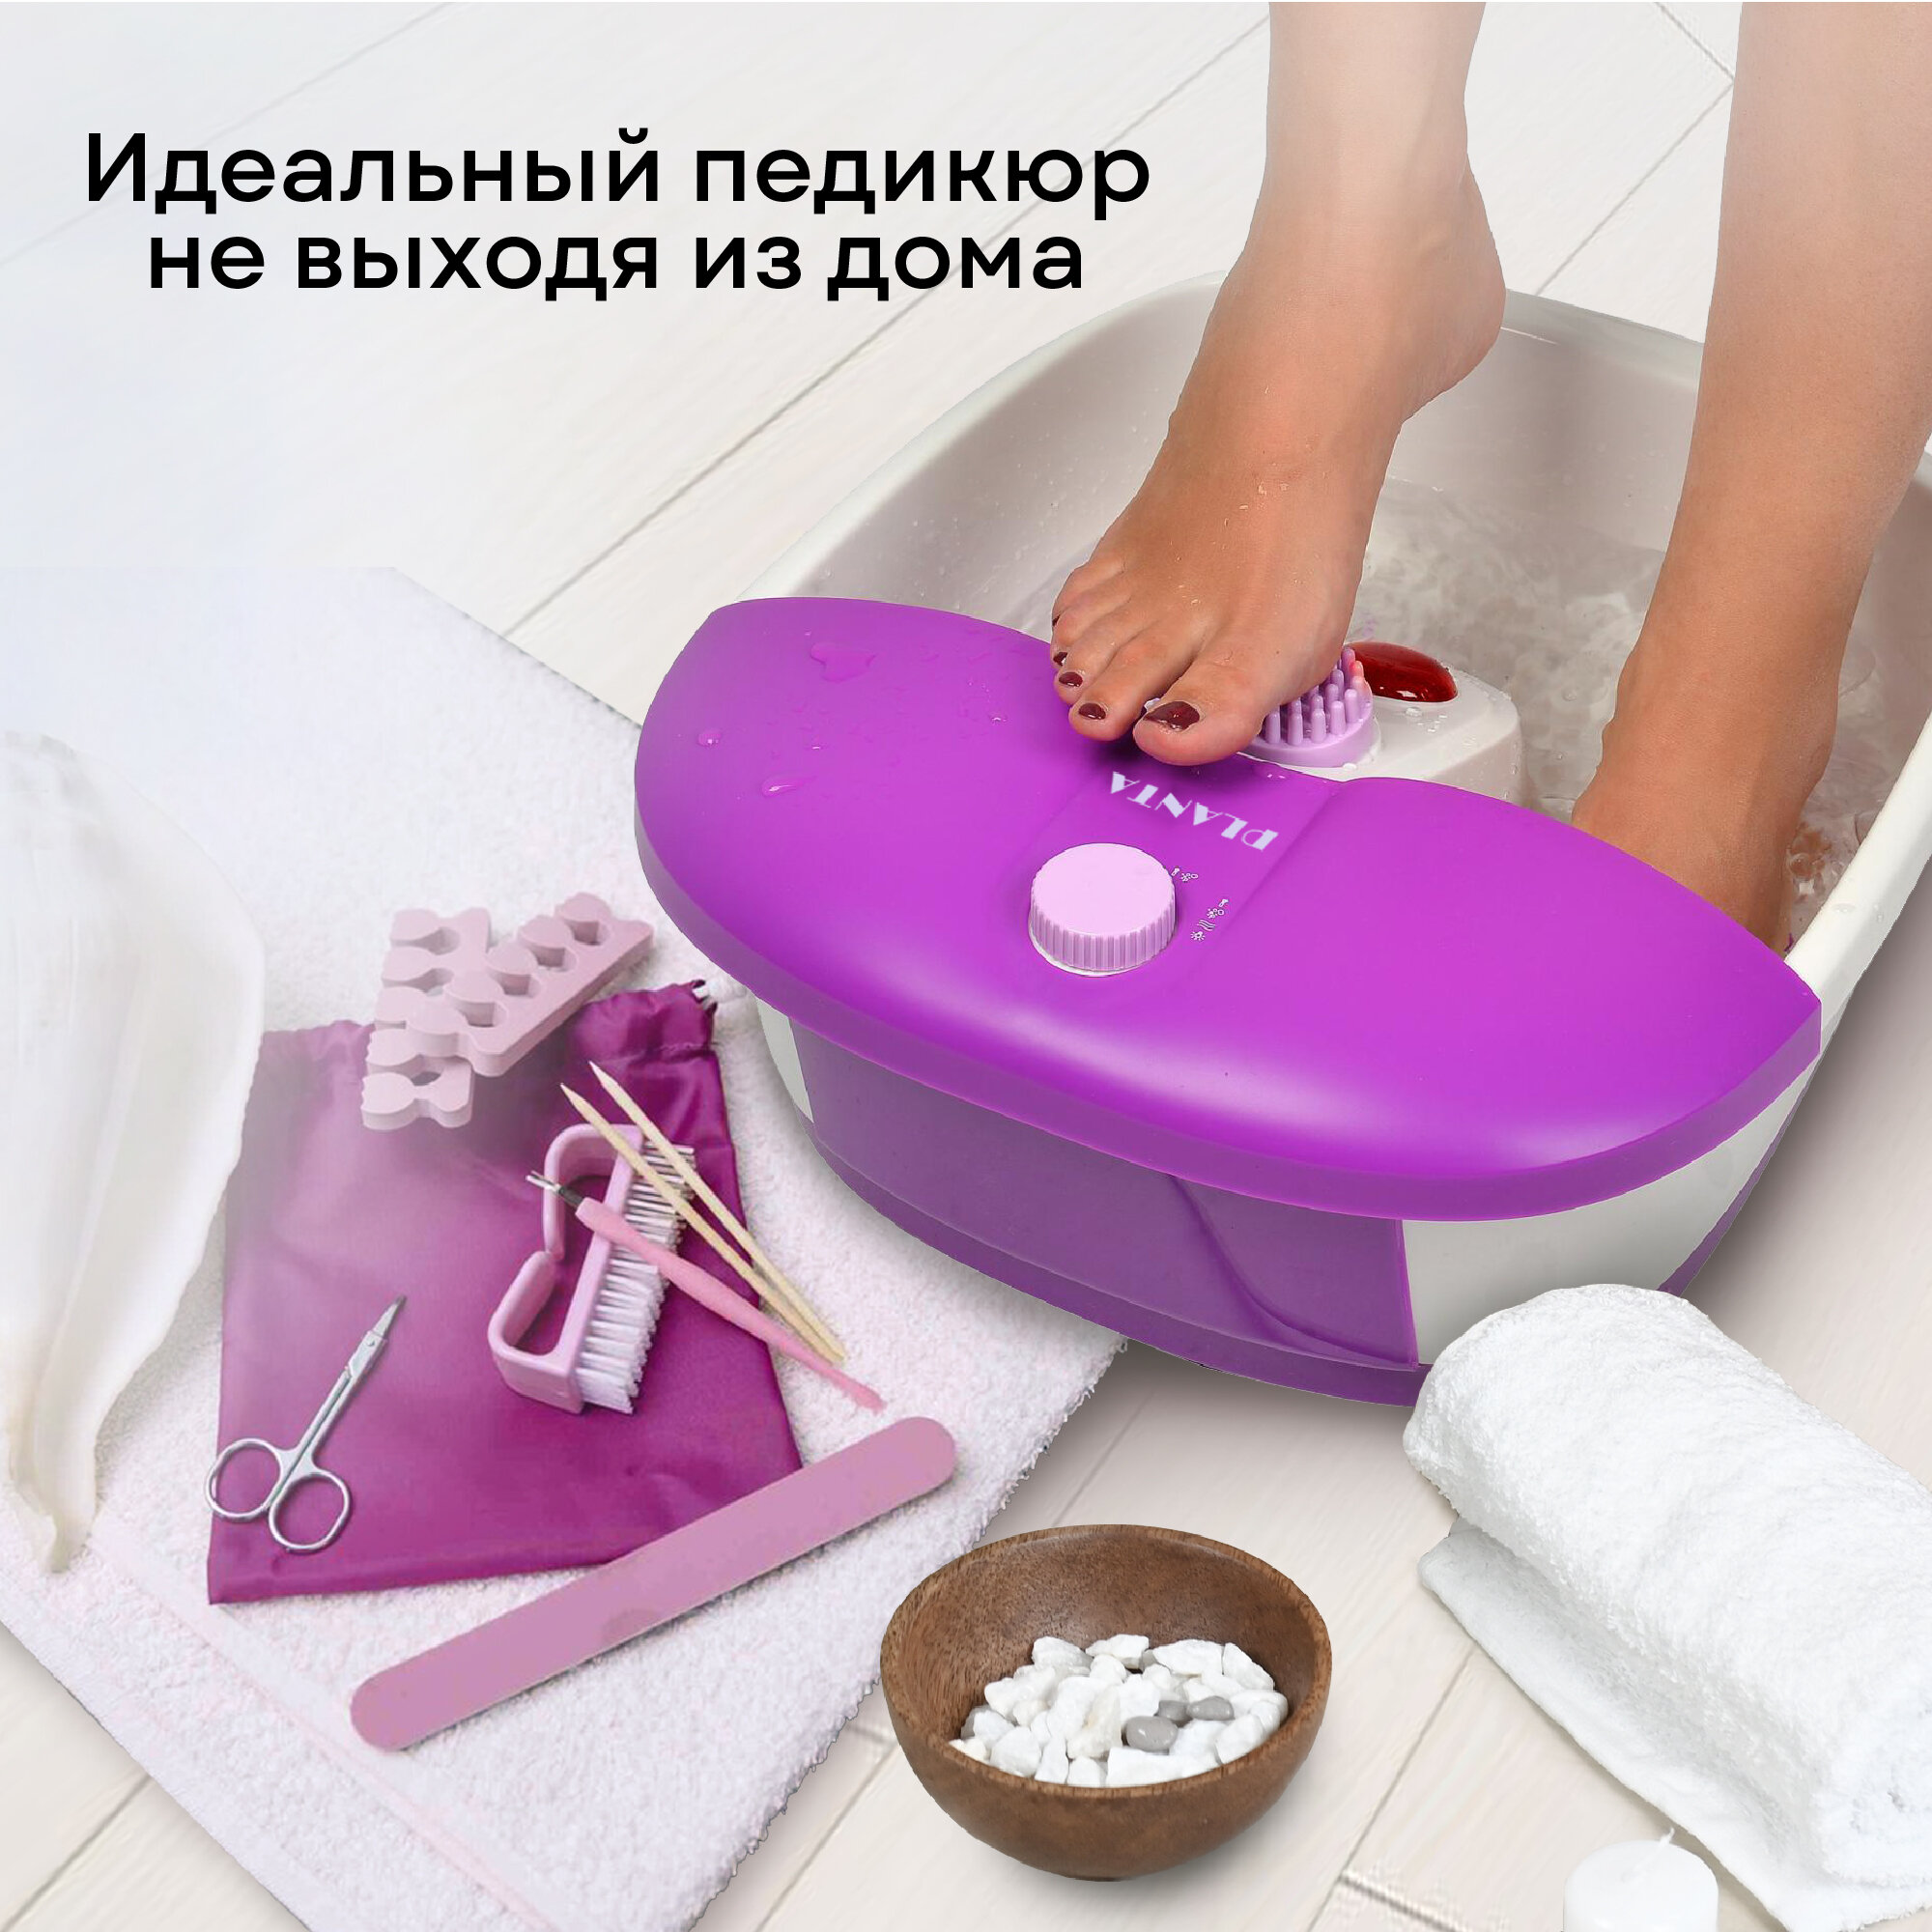 Гидромассажная ванночка для ног Planta - фото №5